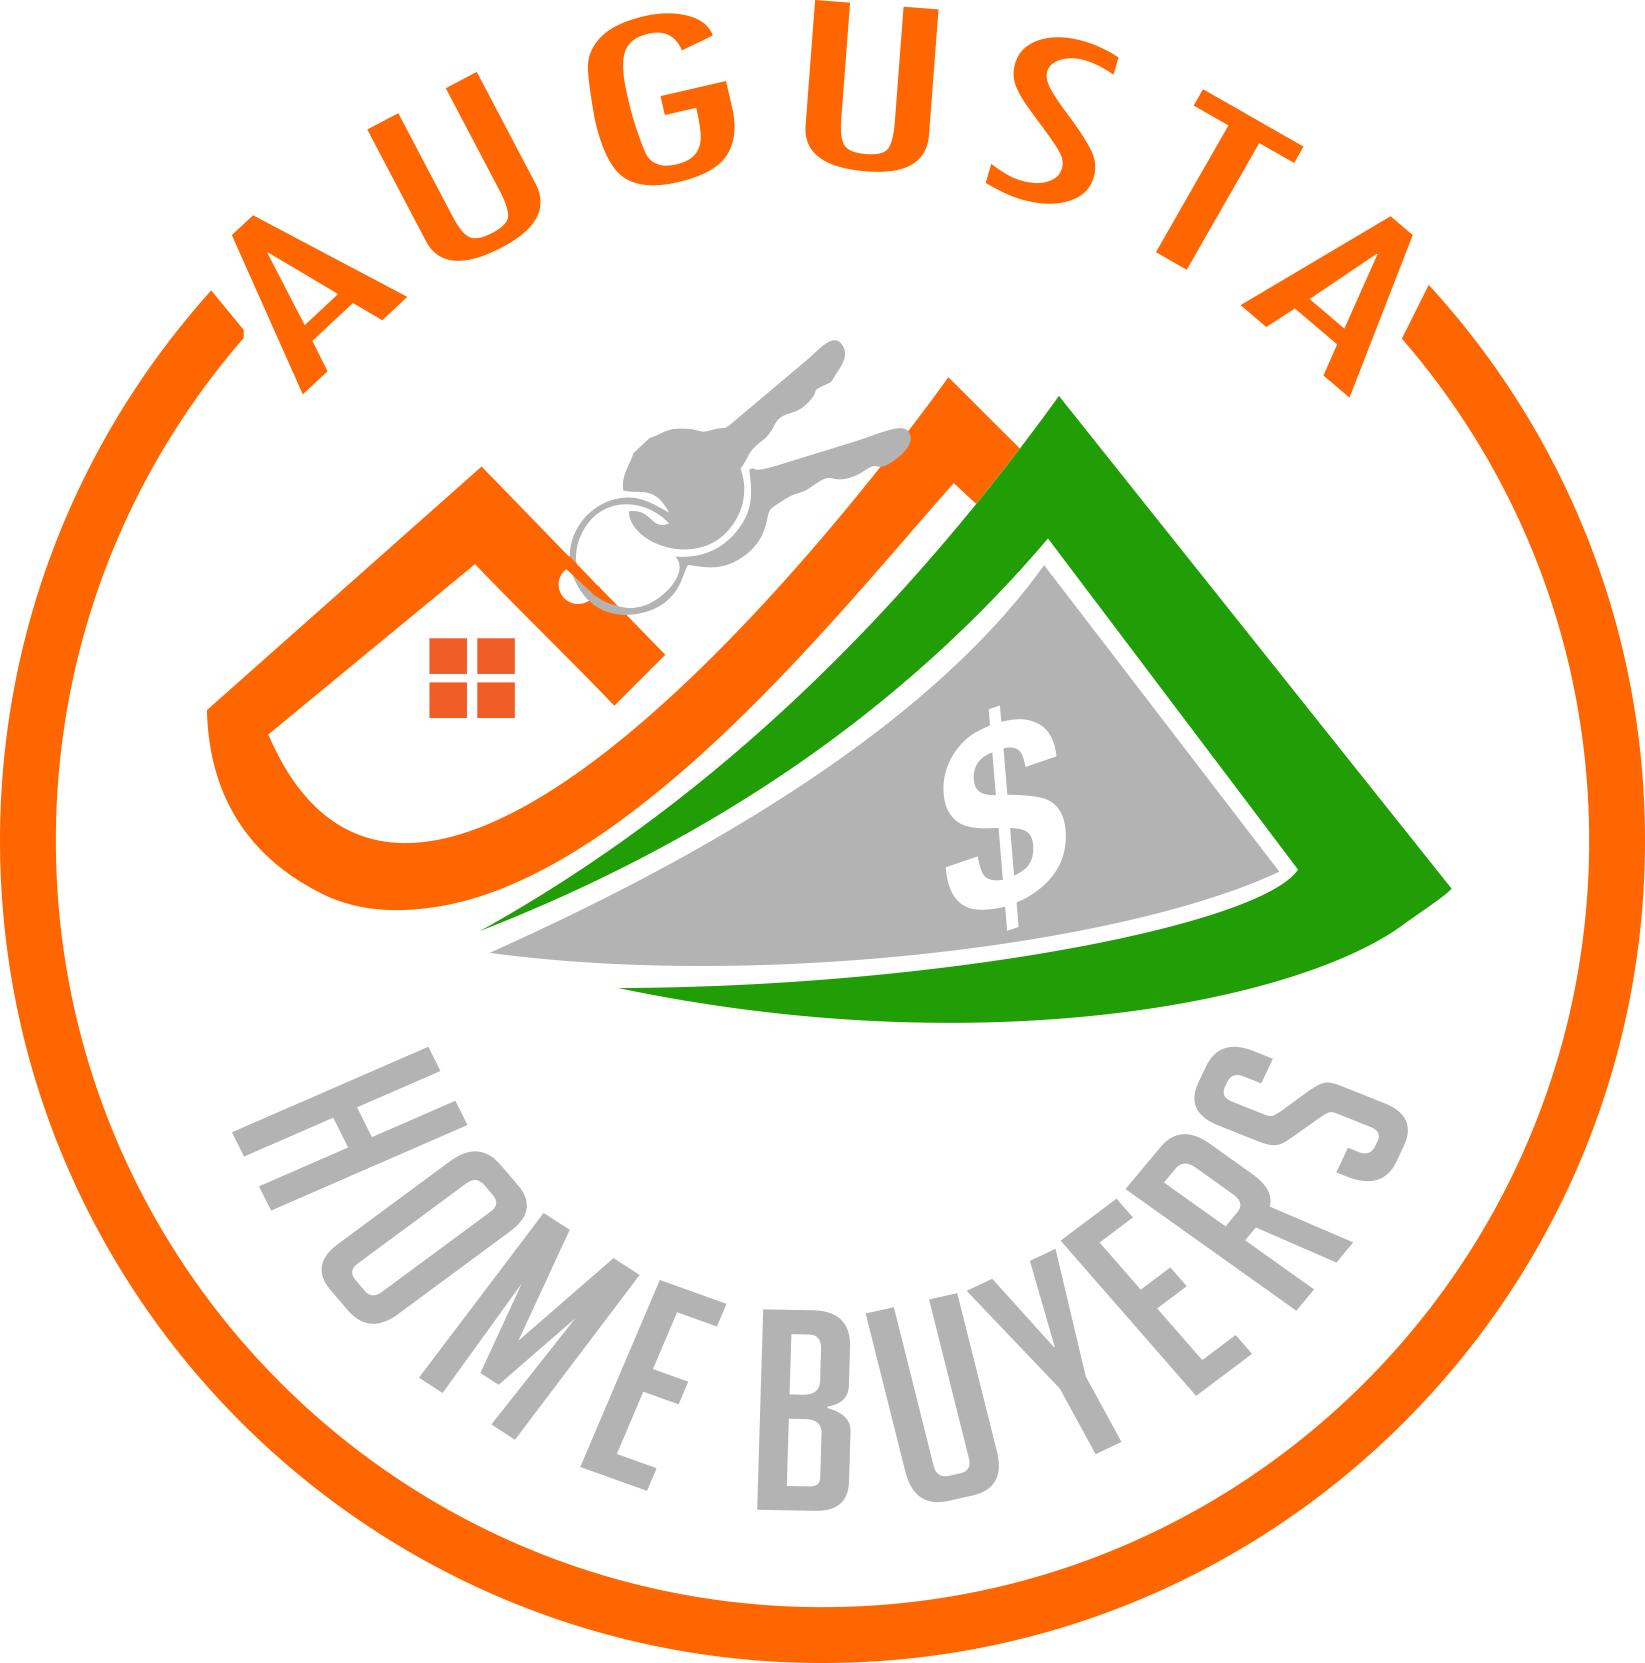 Augusta Home Buyers logo